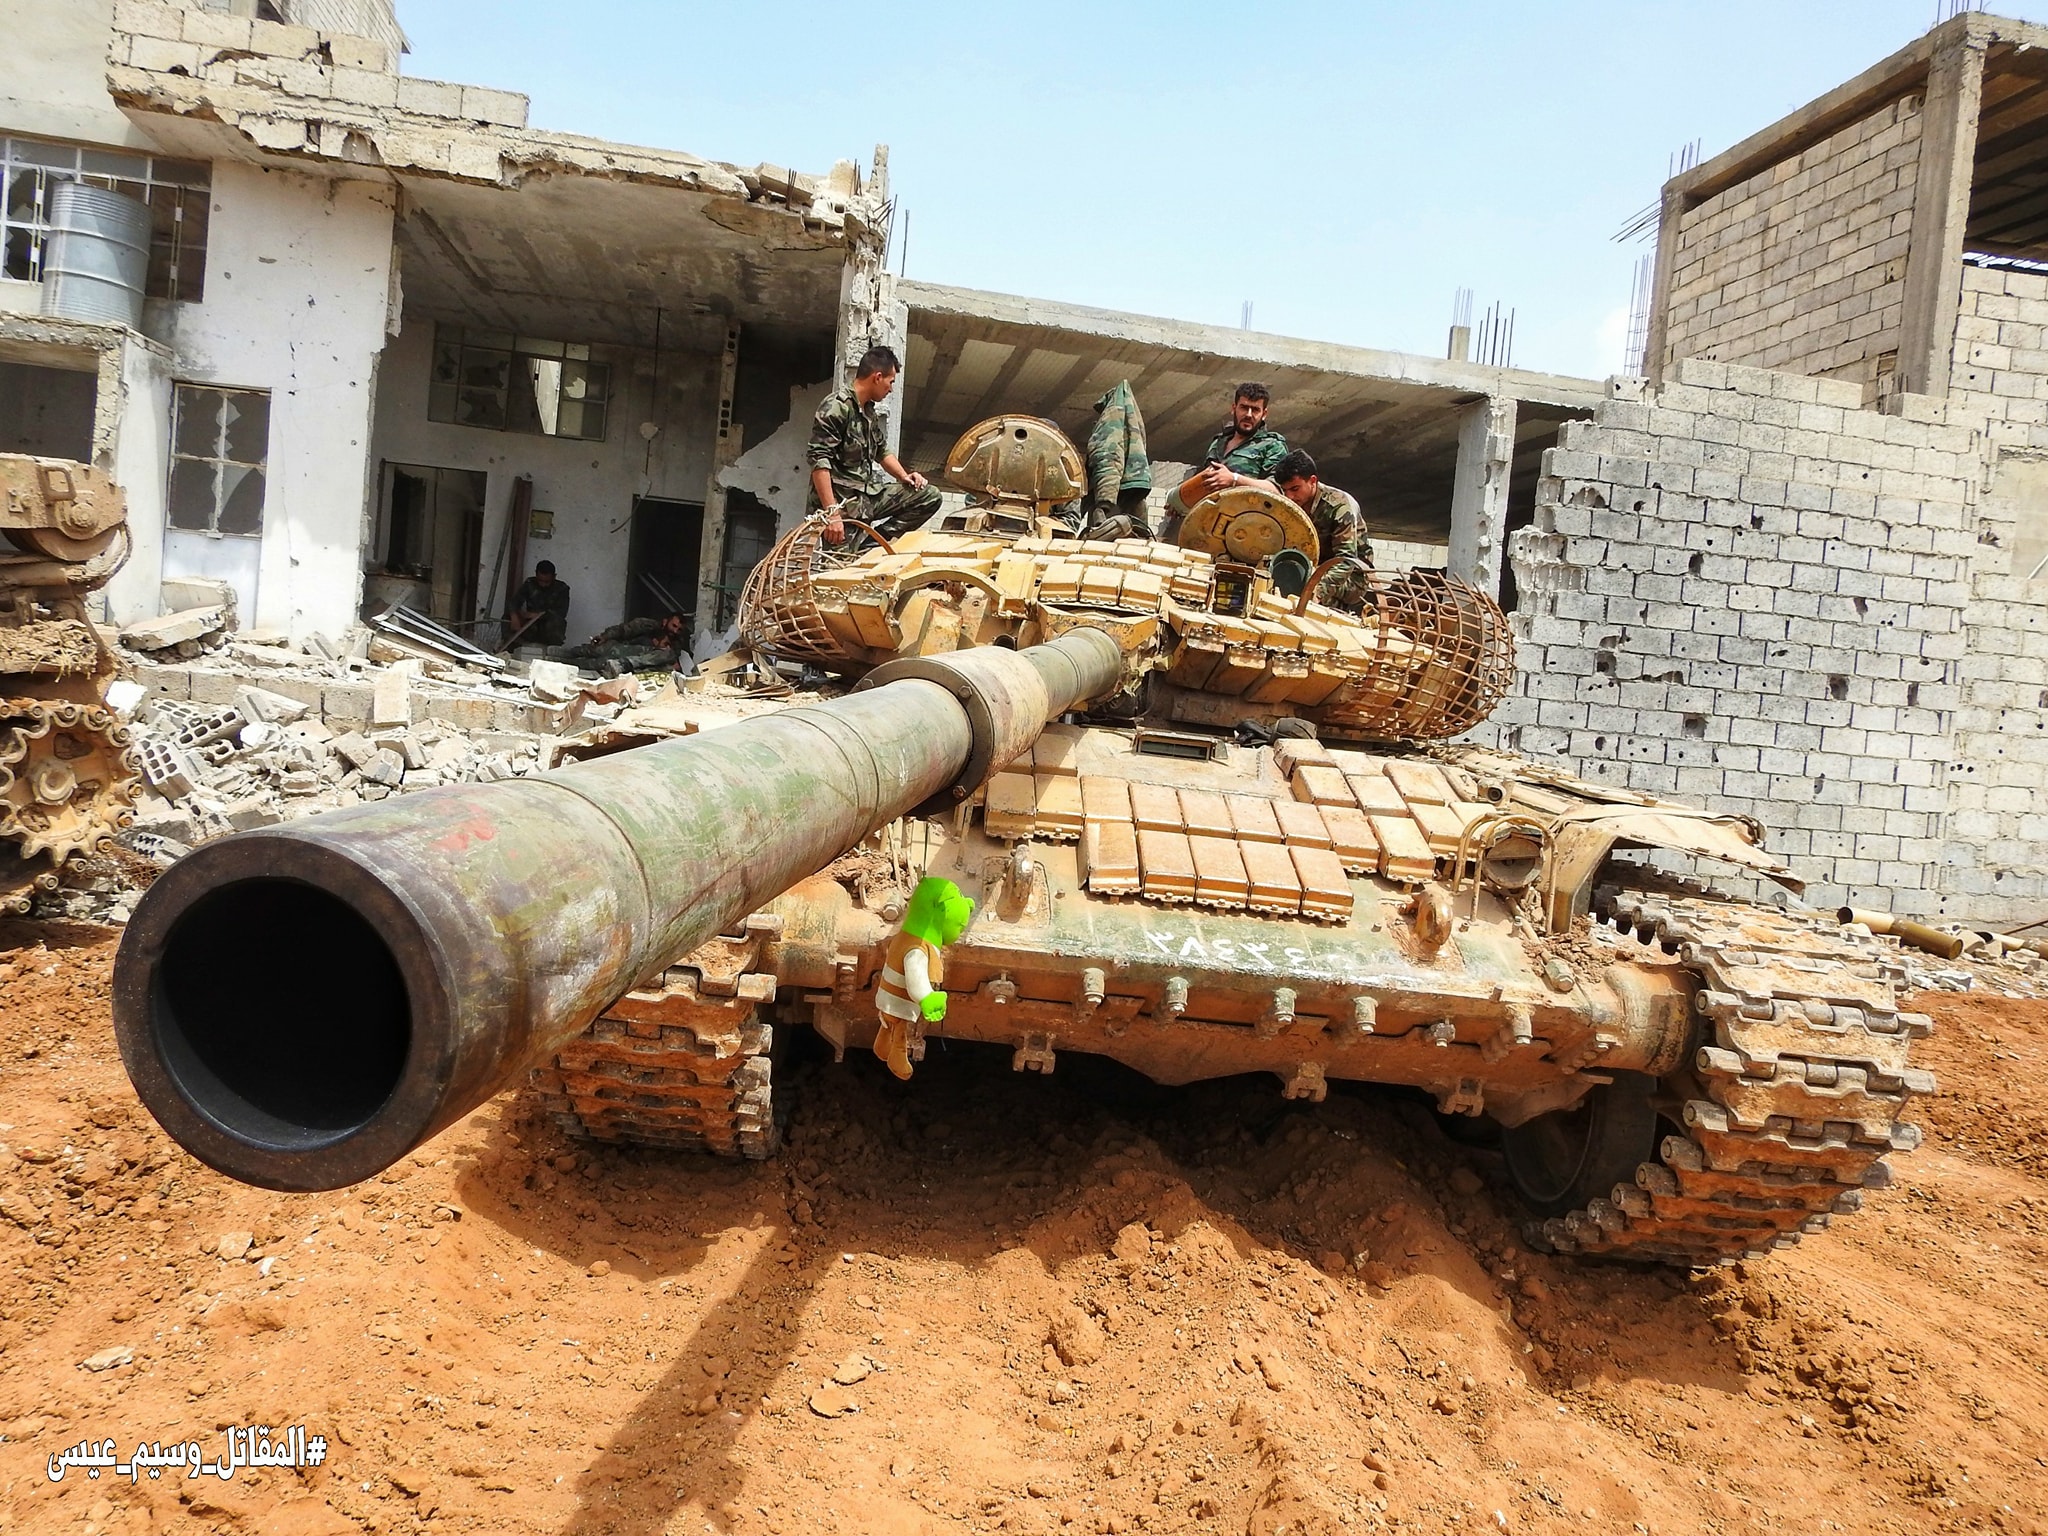 syria tank battles